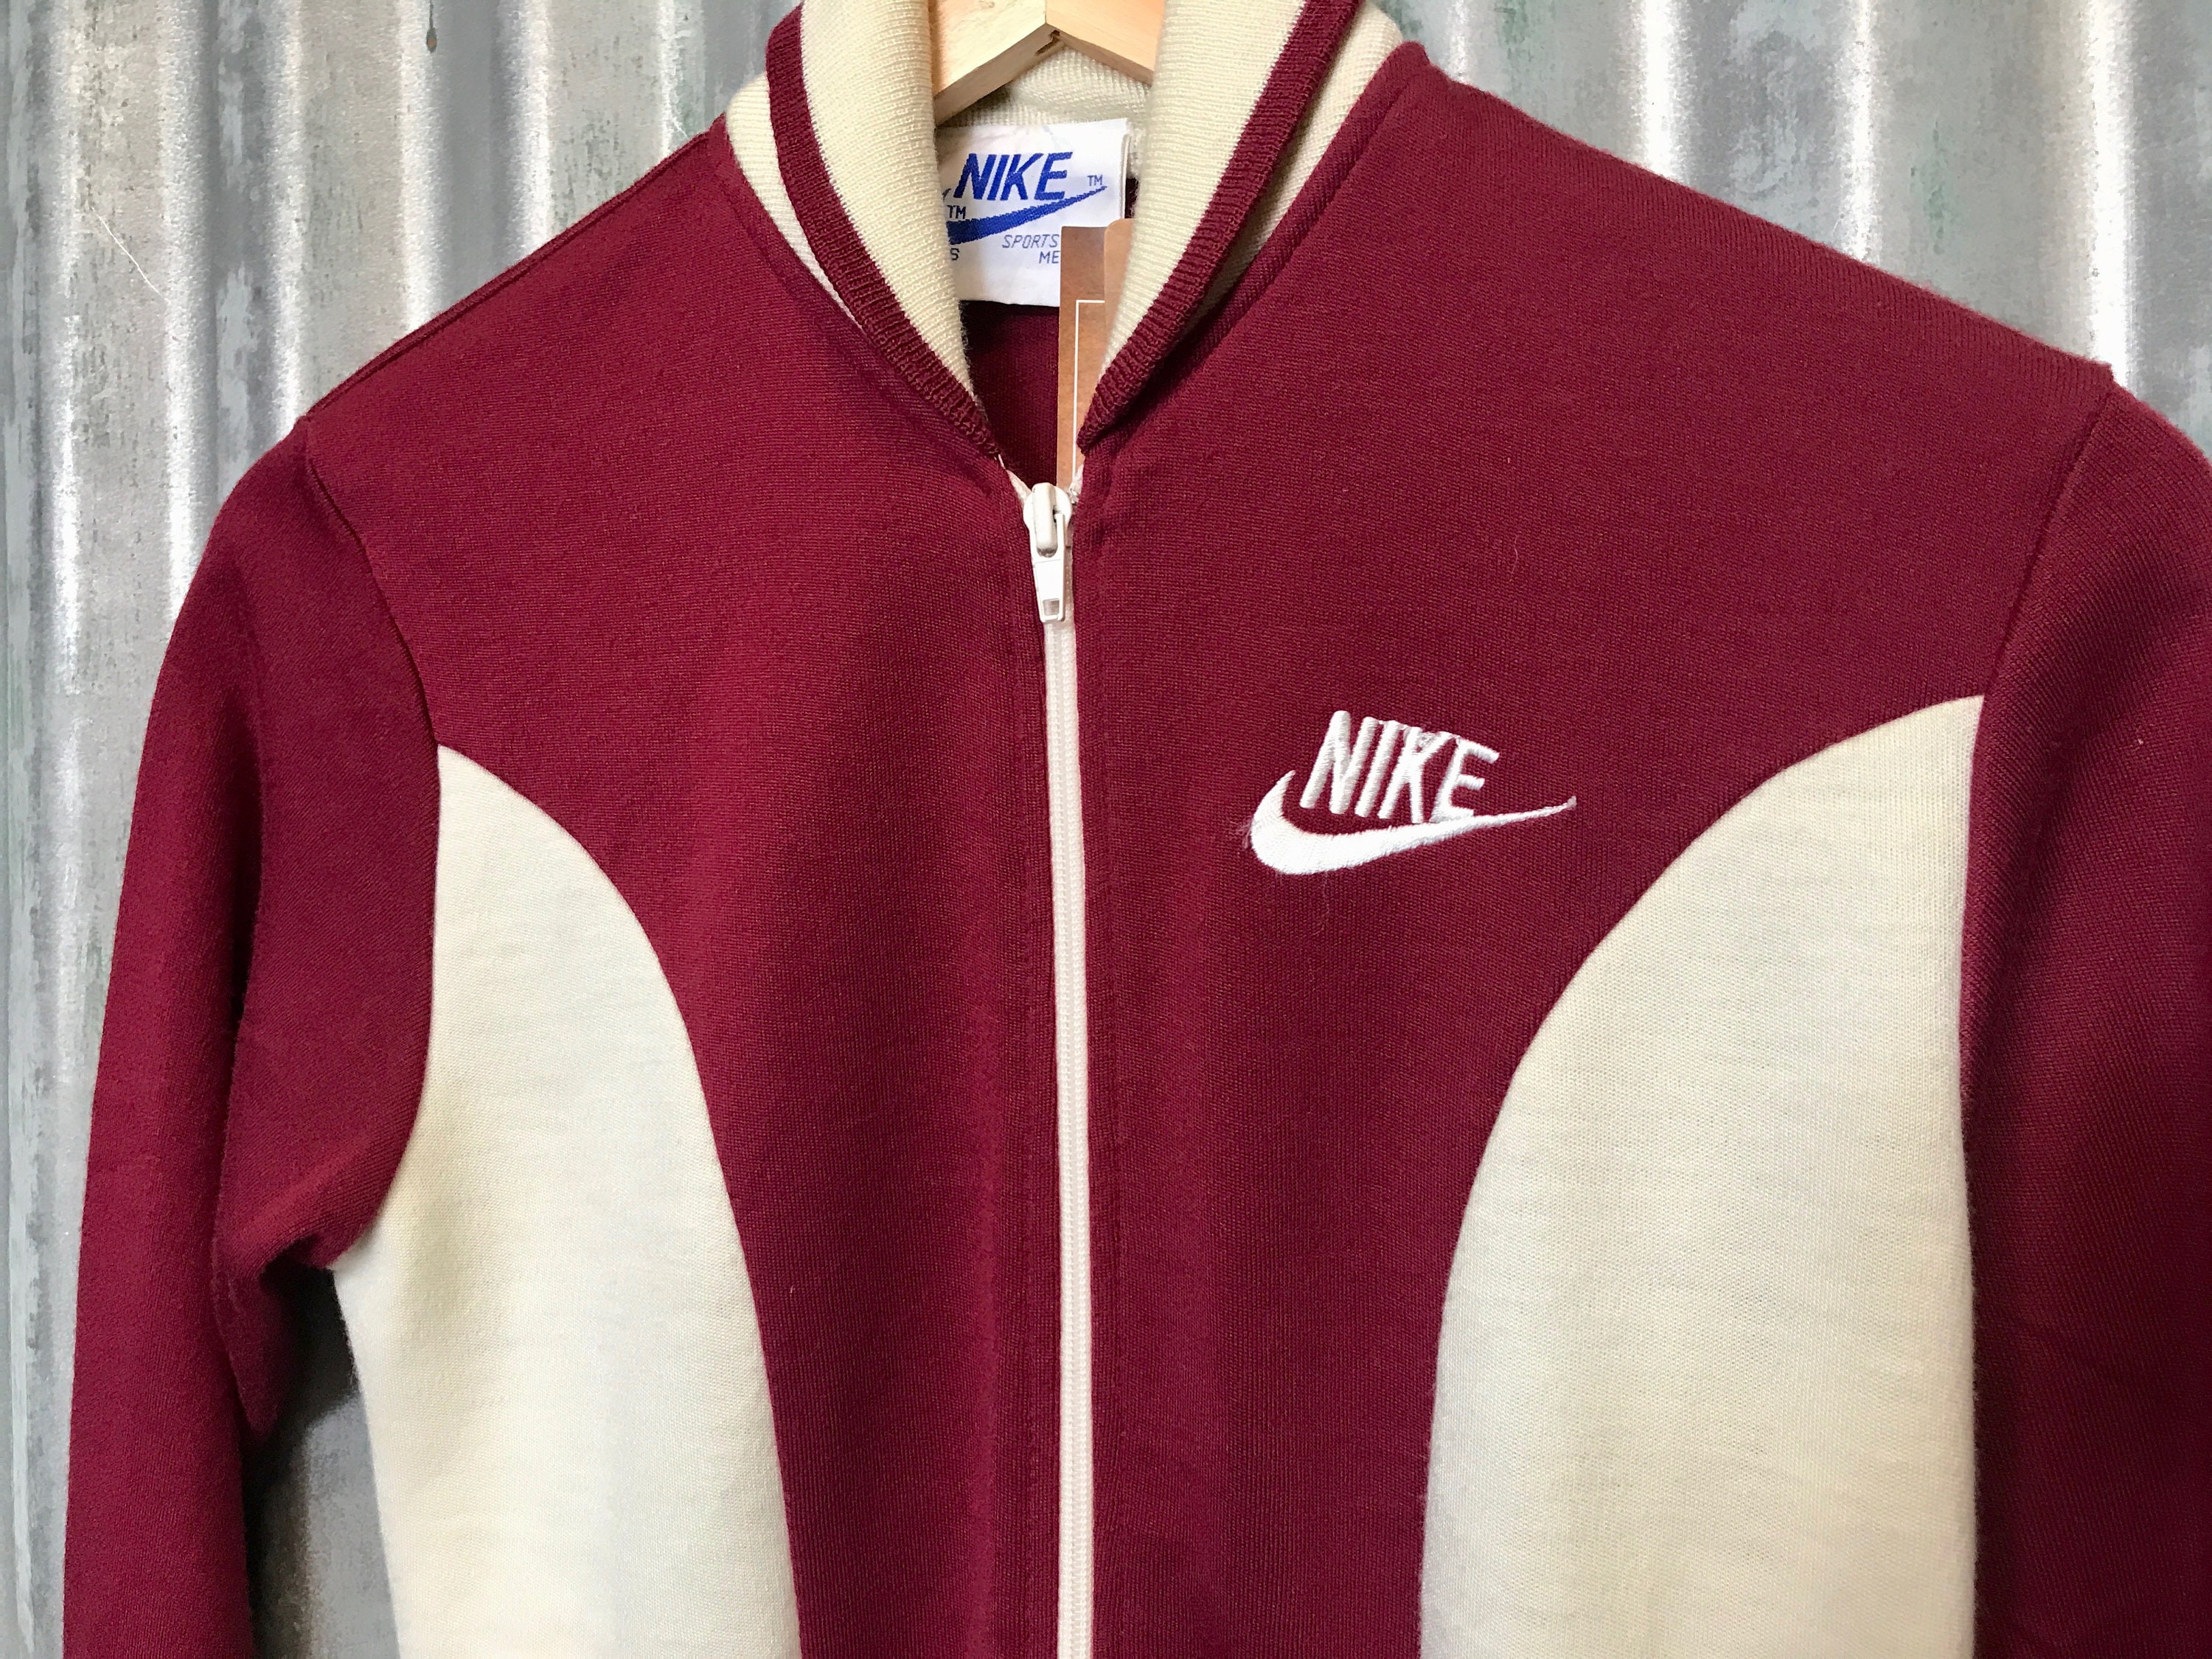 Ithaca Overtreden Minnaar 1980's Nike Vintage Burgundy & White Track Top Jacket Sz - Etsy